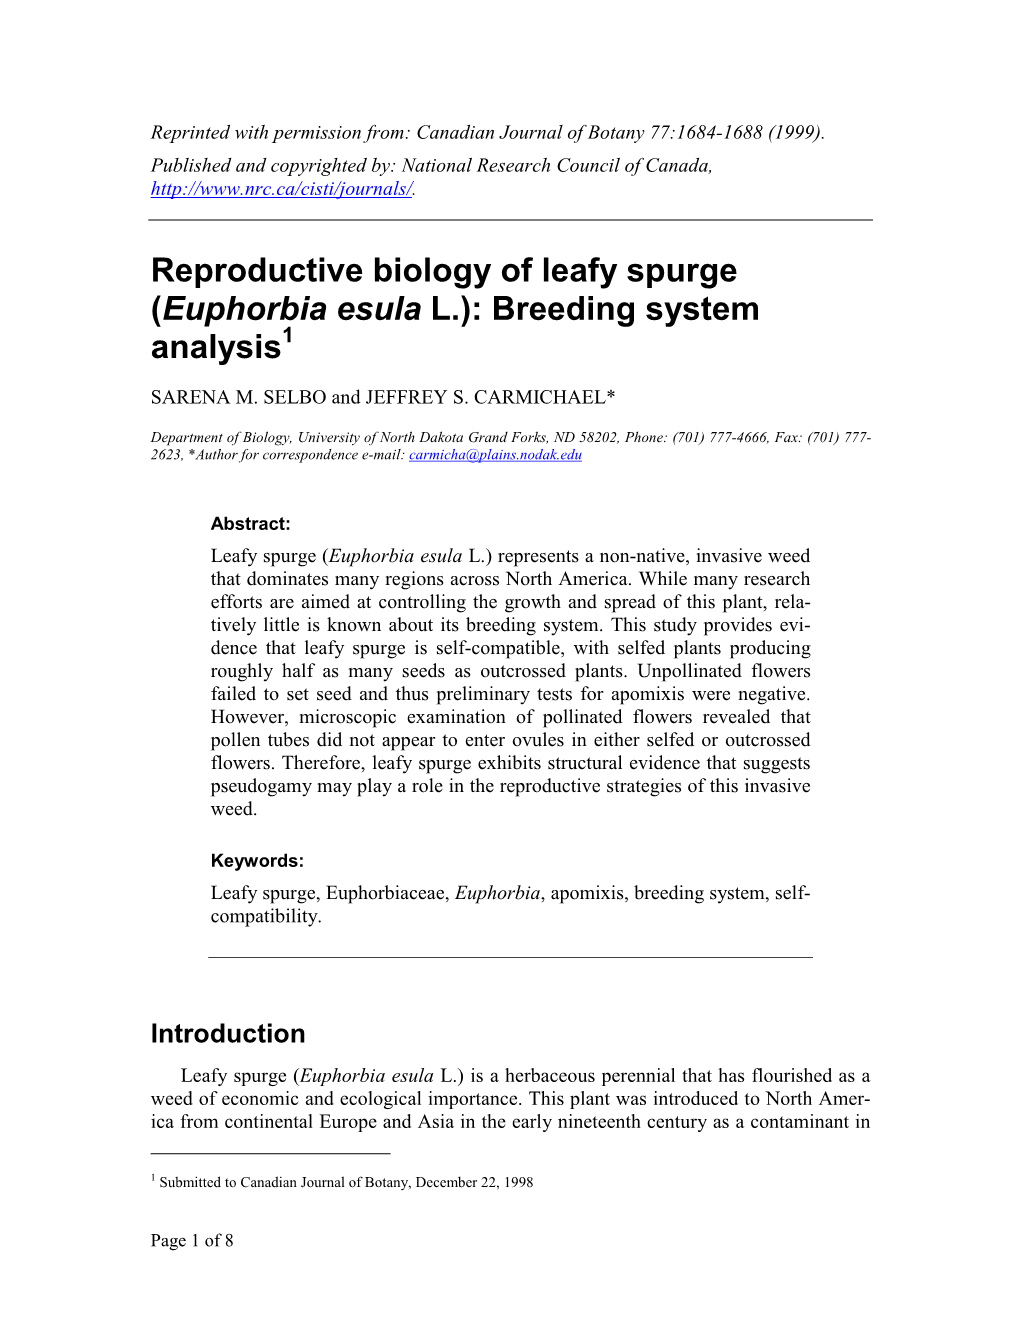 Reproductive Biology of Leafy Spurge (Euphorbia Esula L.): Breeding System Analysis1